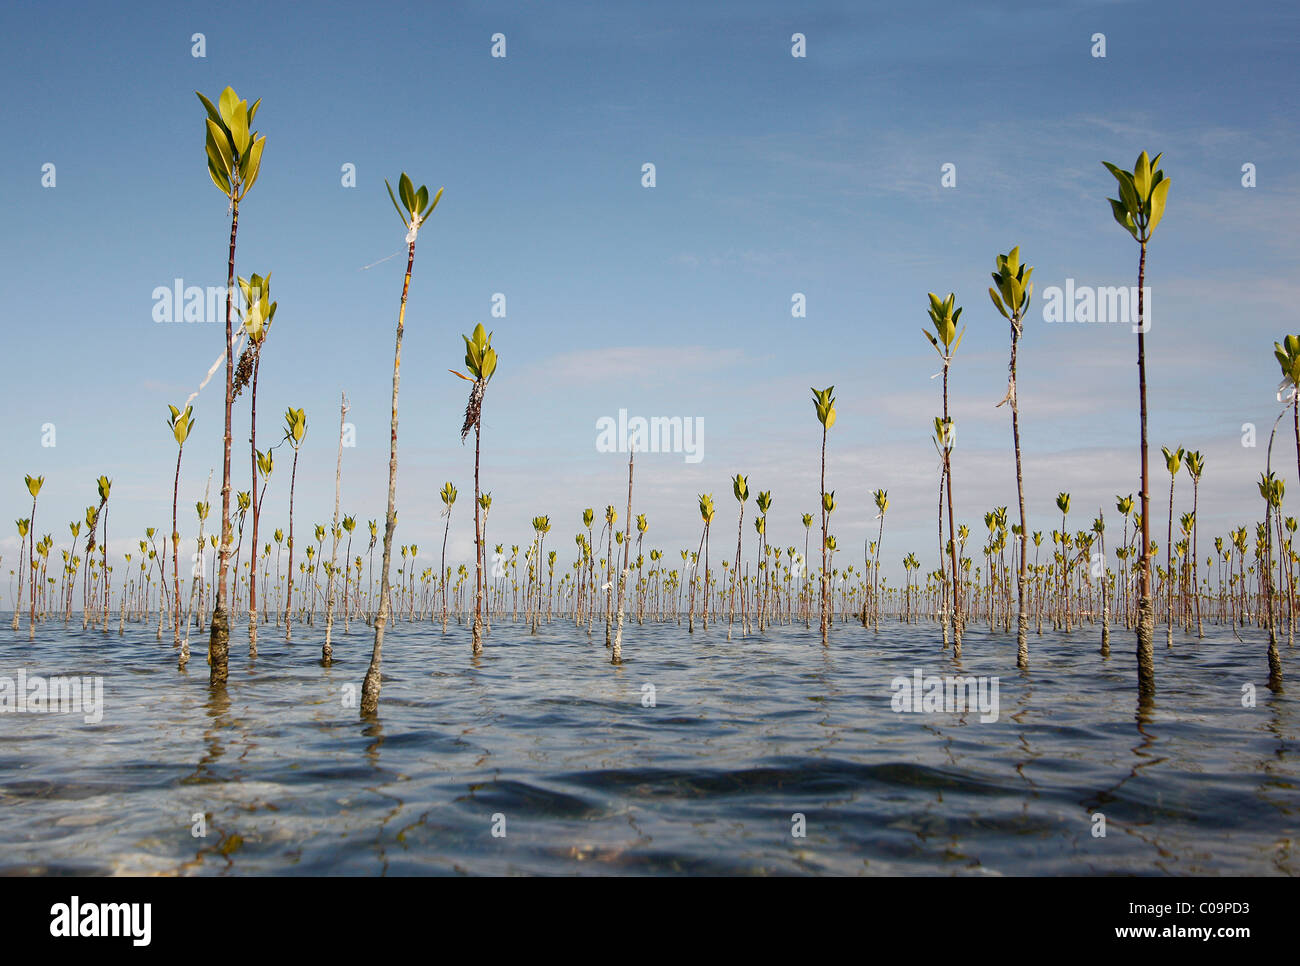 Mangrove riforestazione piantando mangrovie, la foresta di mangrovie di un anno di età, Bohol, Visayas, Filippine, Sud-est asiatico, in Asia Foto Stock